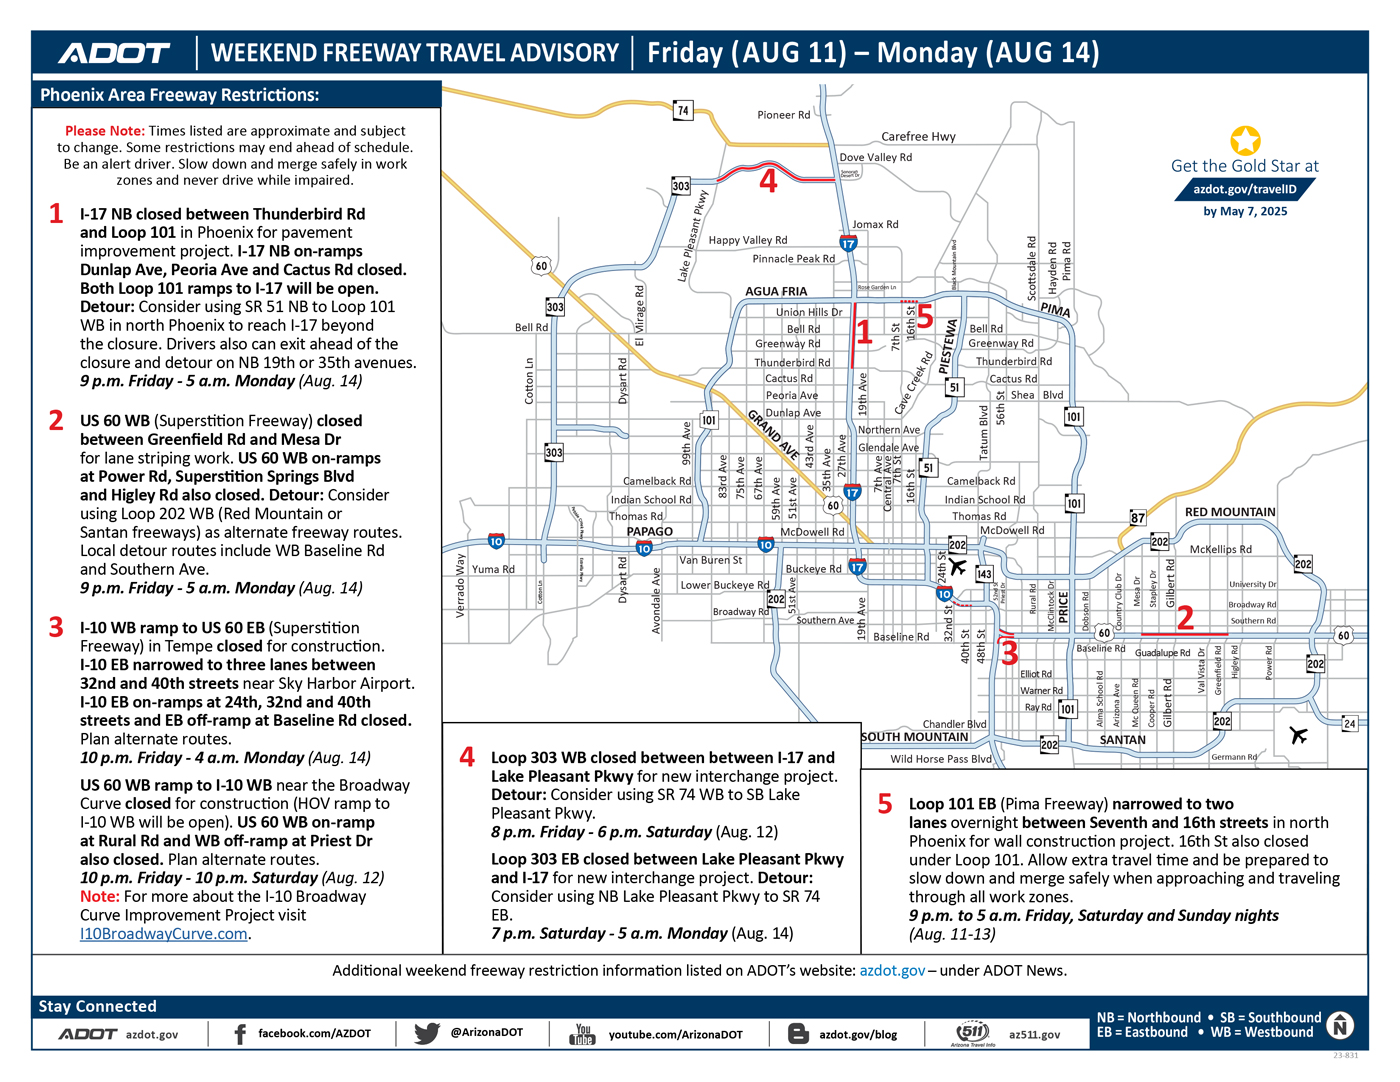 ADOT's Weekend Freeway Travel Advisory Map (Aug. 11-14, '23) - Phoenix Area